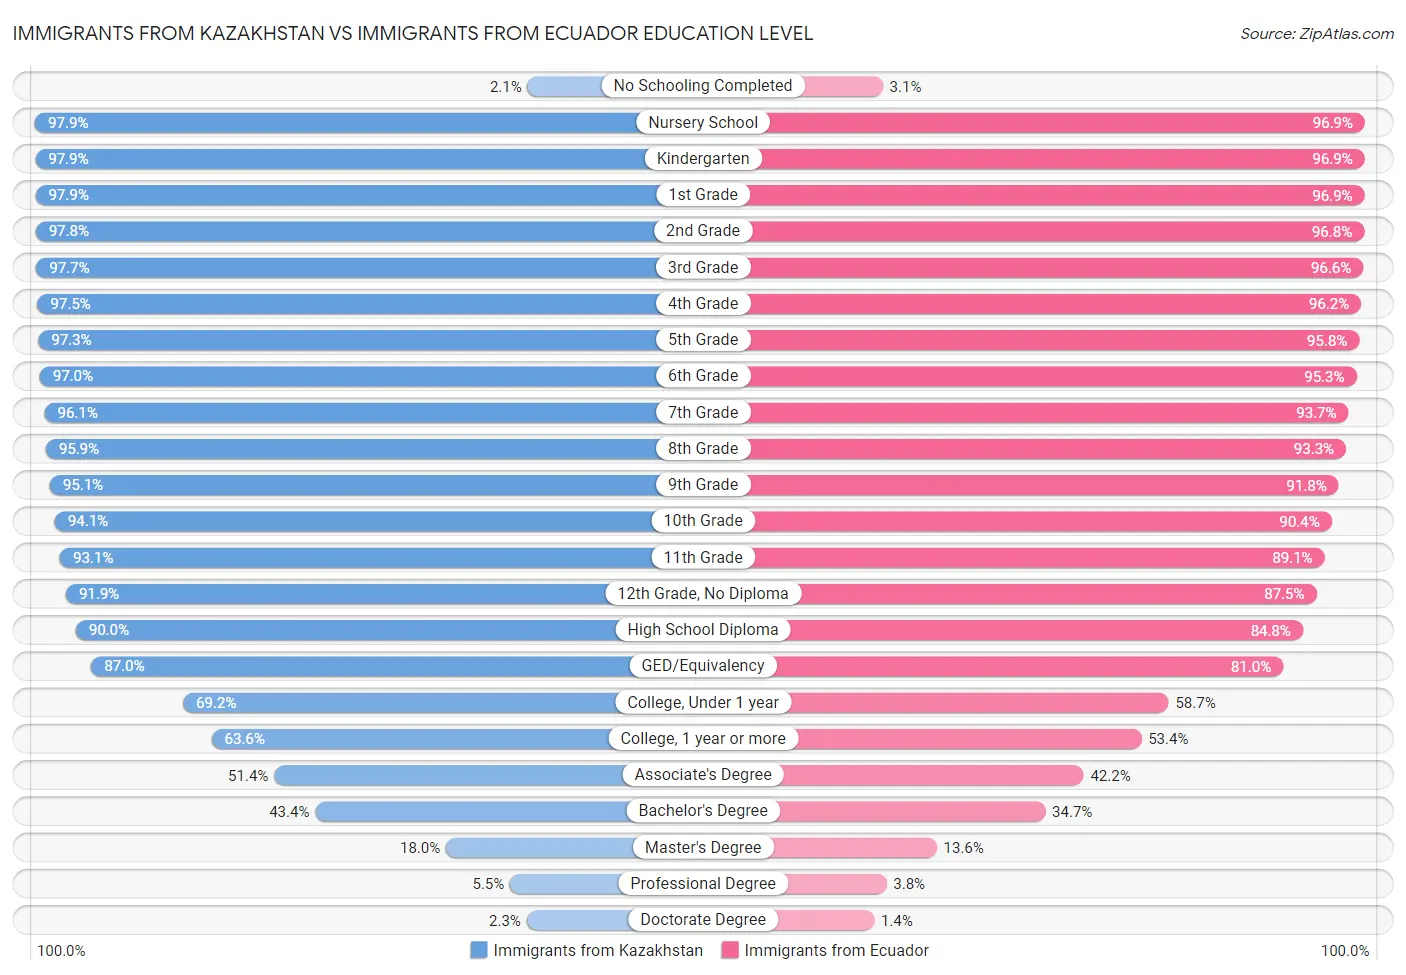 Immigrants from Kazakhstan vs Immigrants from Ecuador Education Level